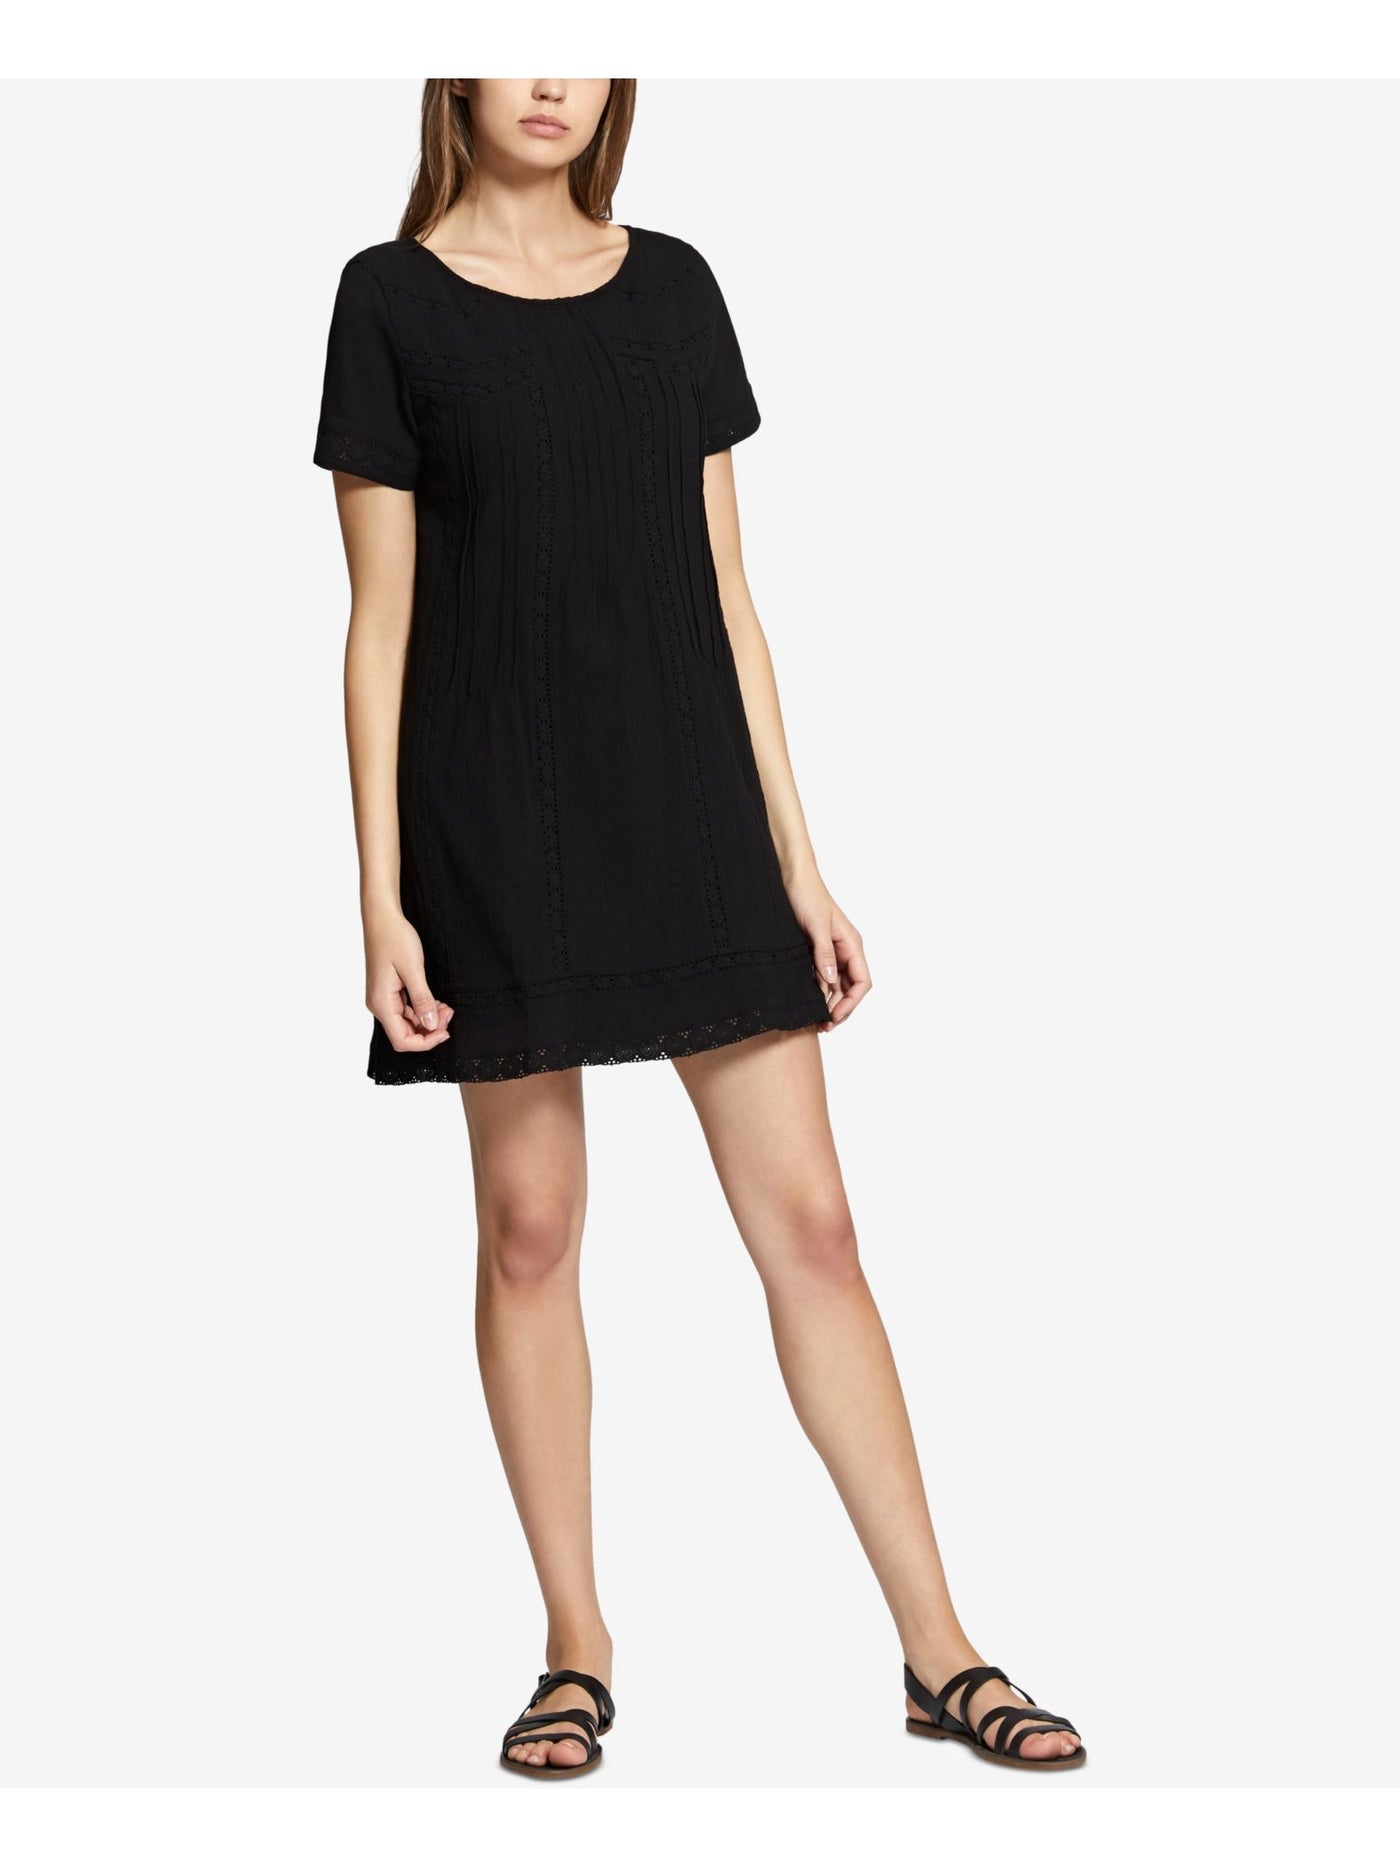 SANCTUARY Womens Black Lace Short Sleeve Jewel Neck Above The Knee Evening Shift Dress S